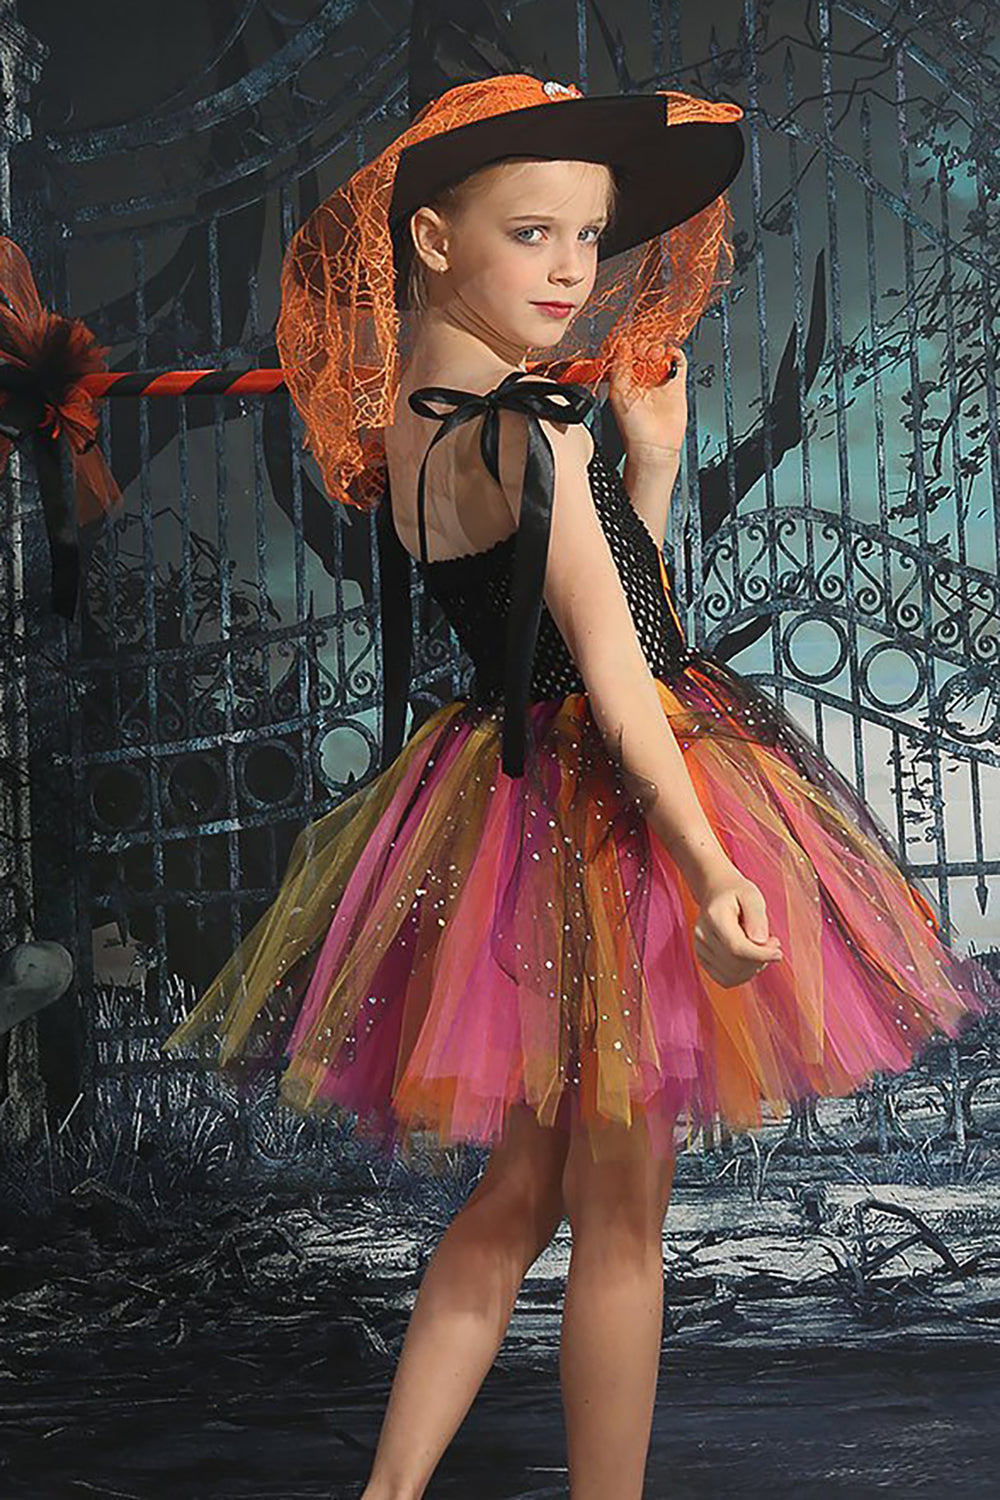 Sparkly Black Tulle Halloween Girl Dress